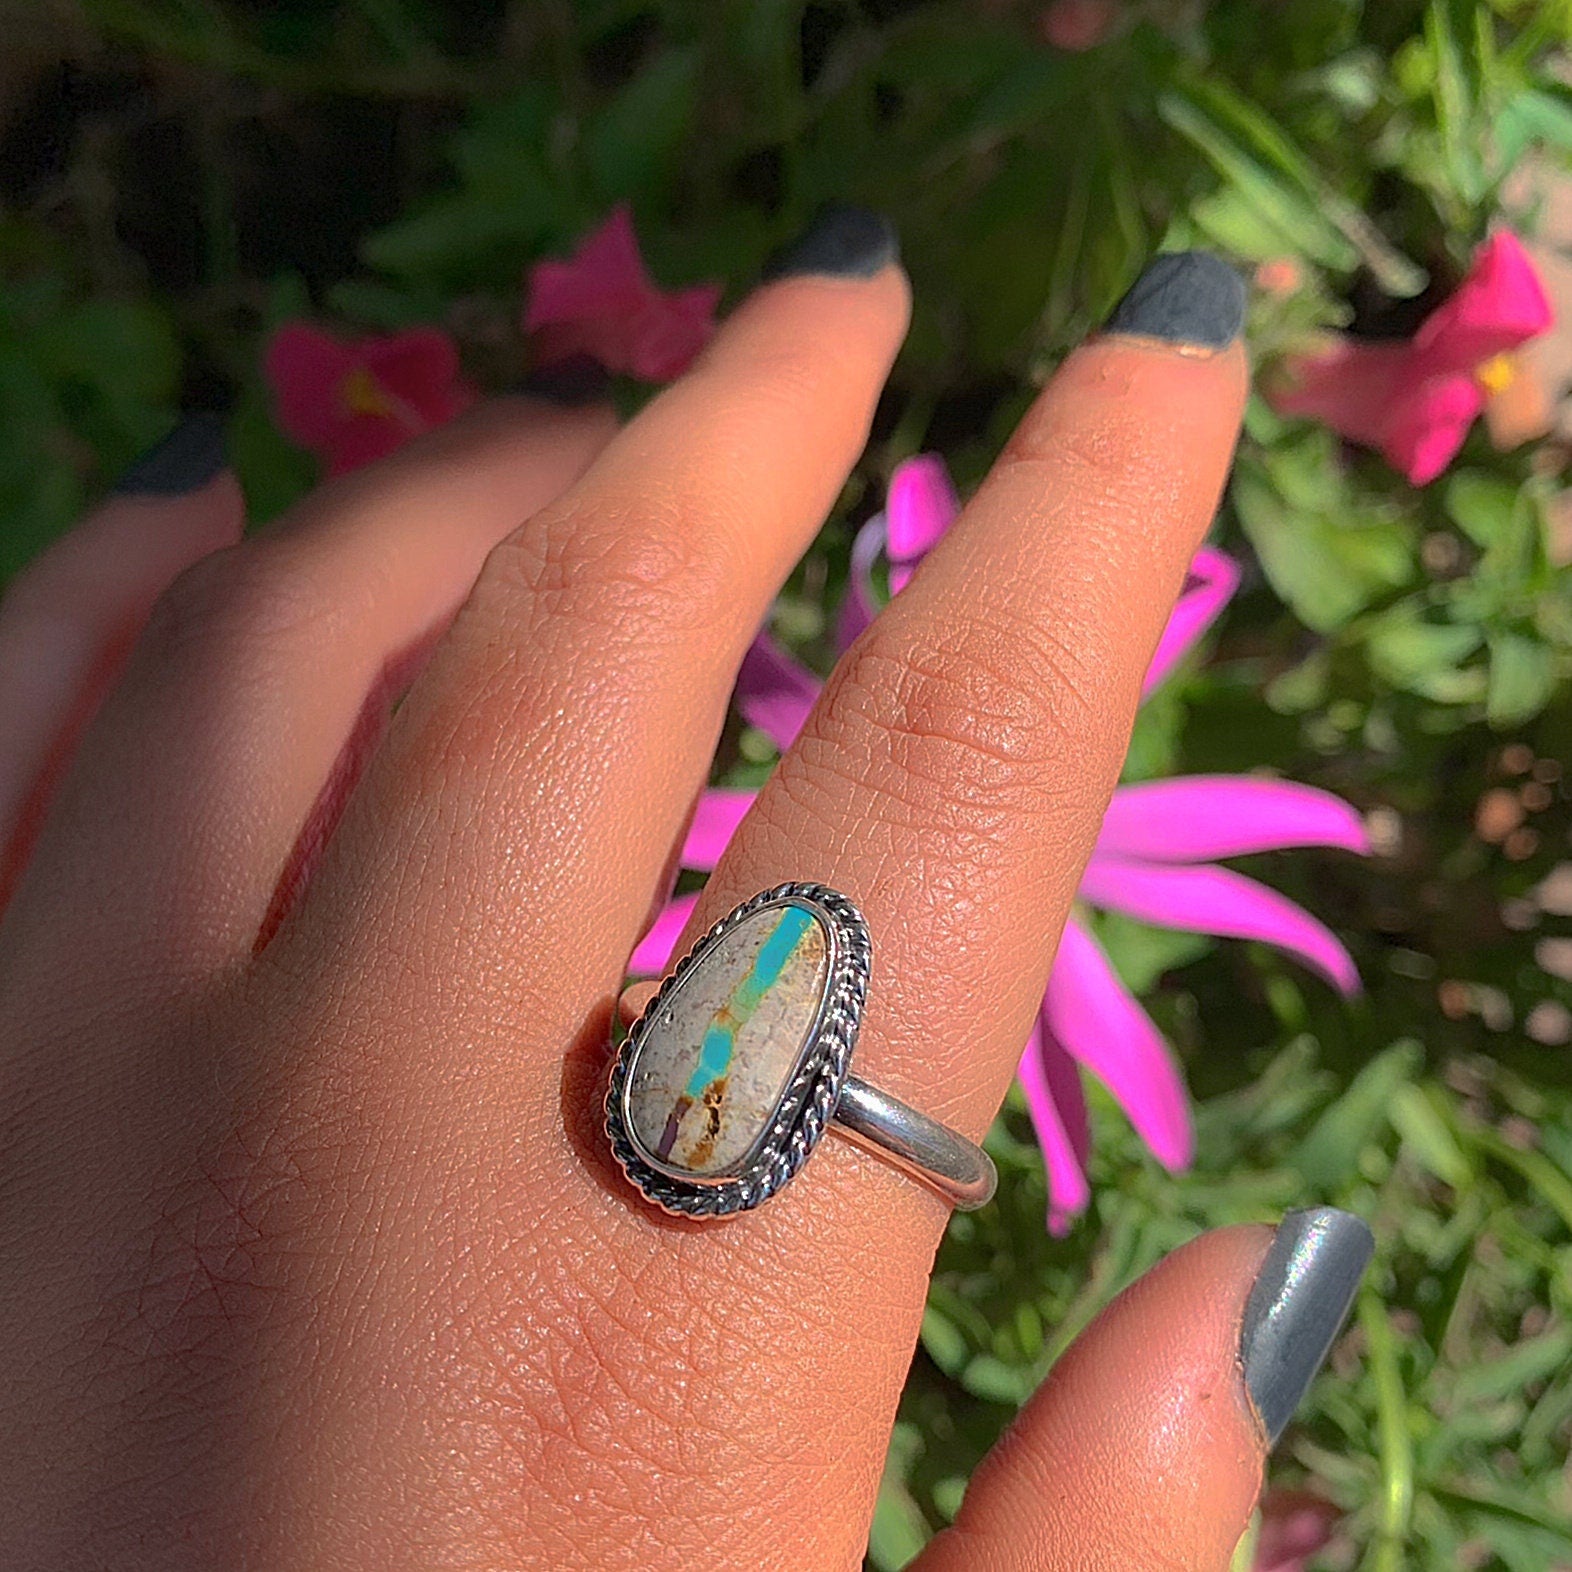 Stone Mountain Ribbon Turquoise Ring - Size 11 1/4 to 11 1/2 - Sterling Silver - Stone Mountain Turquoise Jewelry - Genuine Turquoise Ring